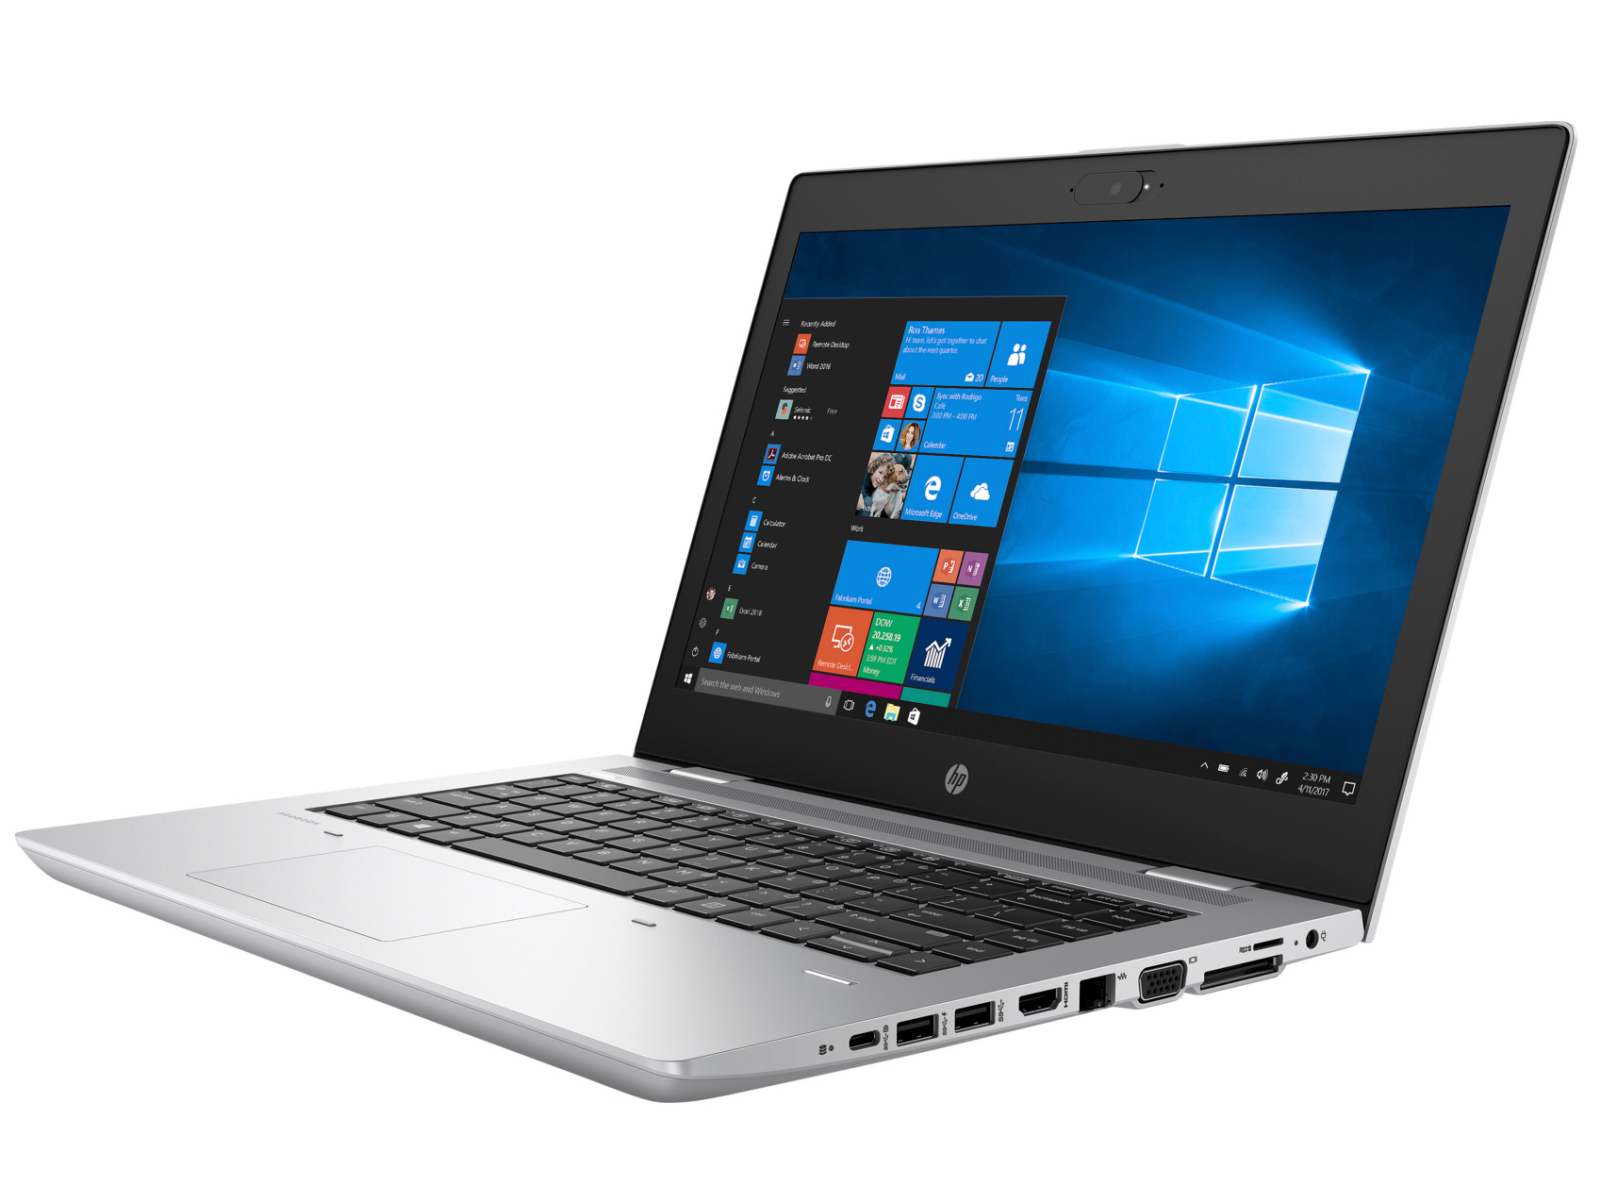 HP ProBook 645 G4 (Ryzen 5 Pro 2500U, SSD, FHD) Laptop Review 